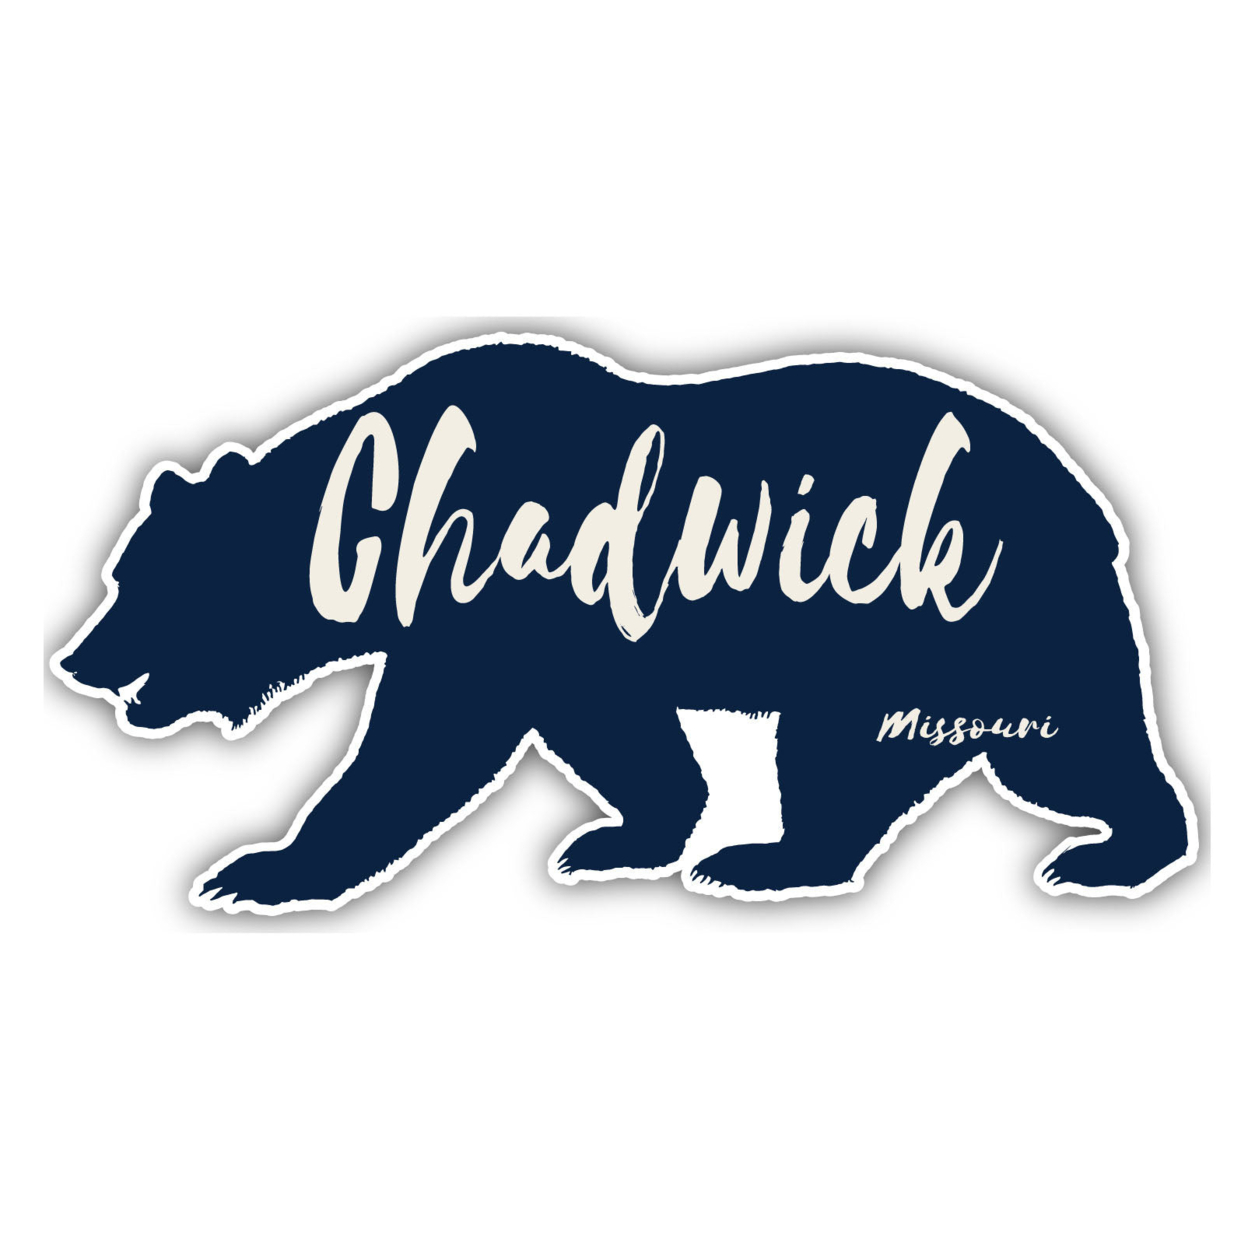 Chadwick Missouri Souvenir Decorative Stickers (Choose Theme And Size) - 4-Pack, 12-Inch, Tent